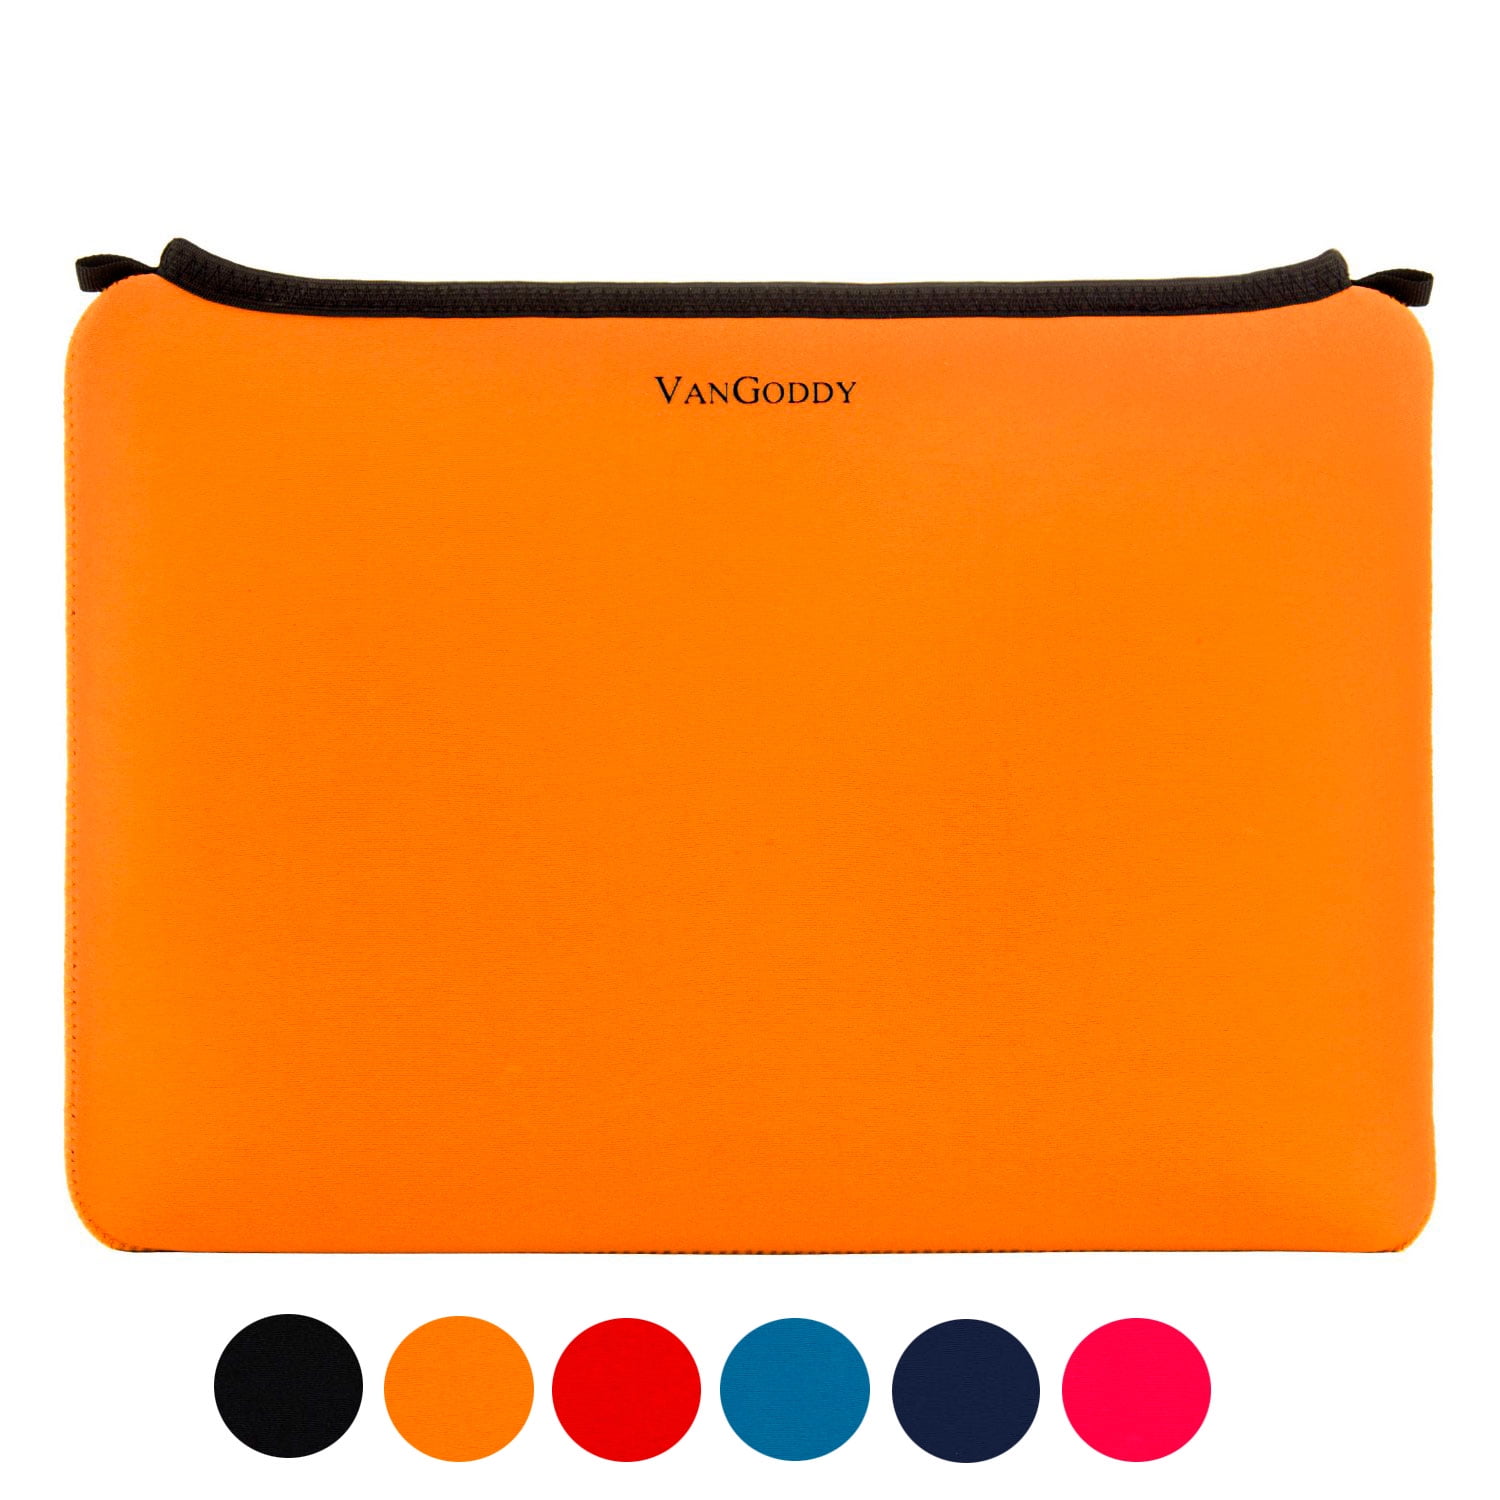 VanGoddy Neoprene Mini Tablet Bag Sleeve Pouch Case Cover For Apple IPad Pro 11 